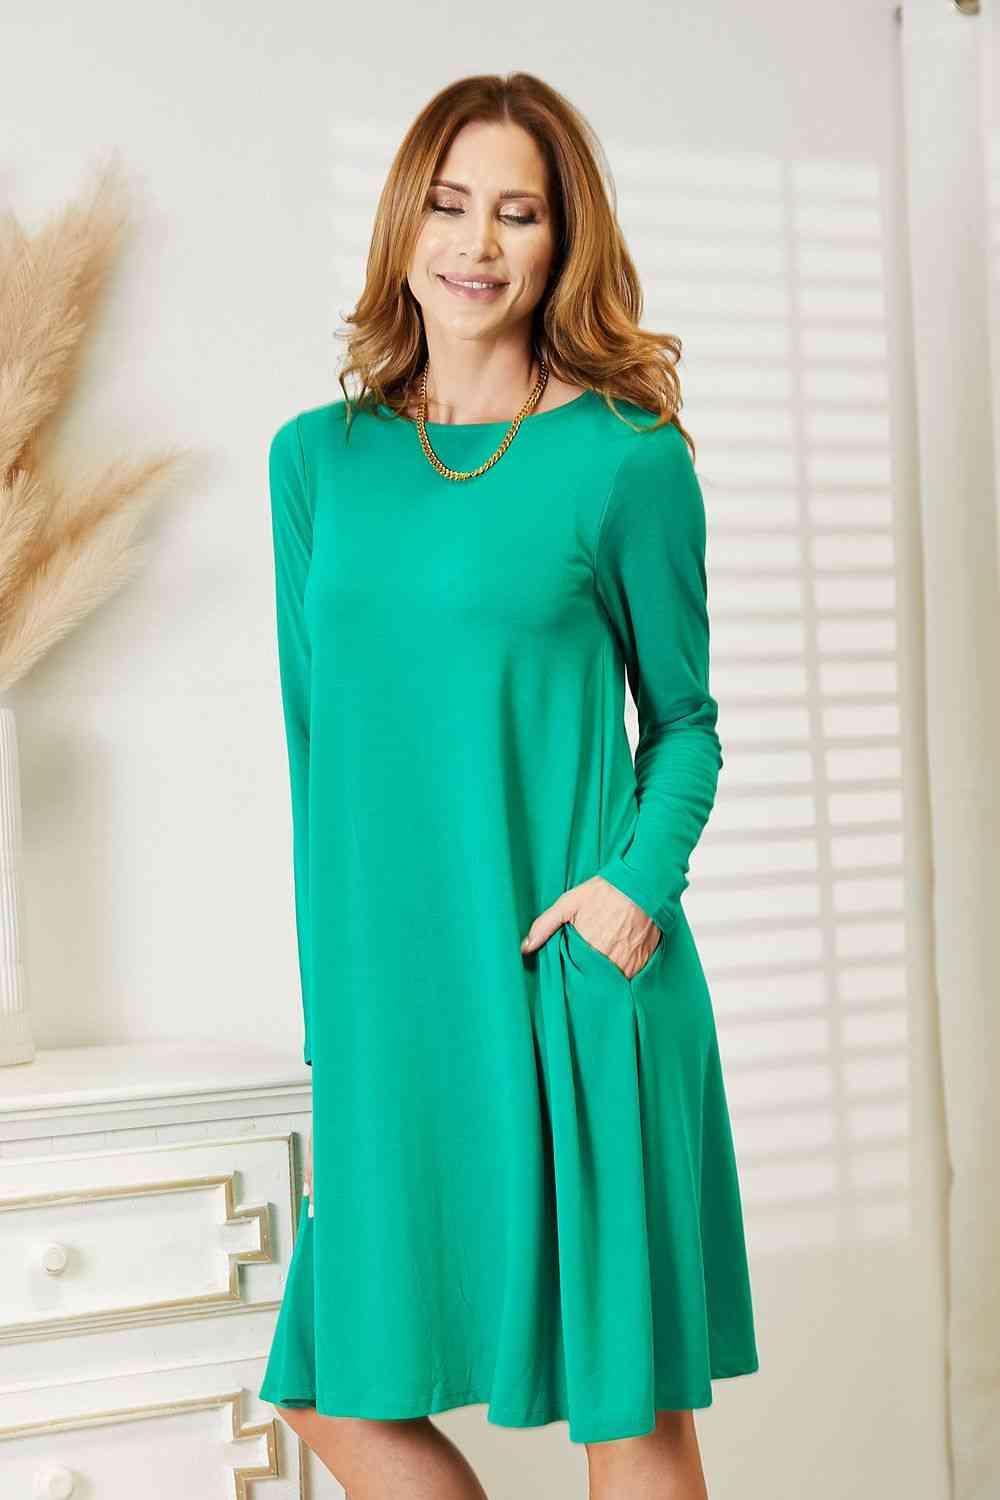 Zenana Full Size Long Sleeve Flare Dress with Pockets - AMIClubwear